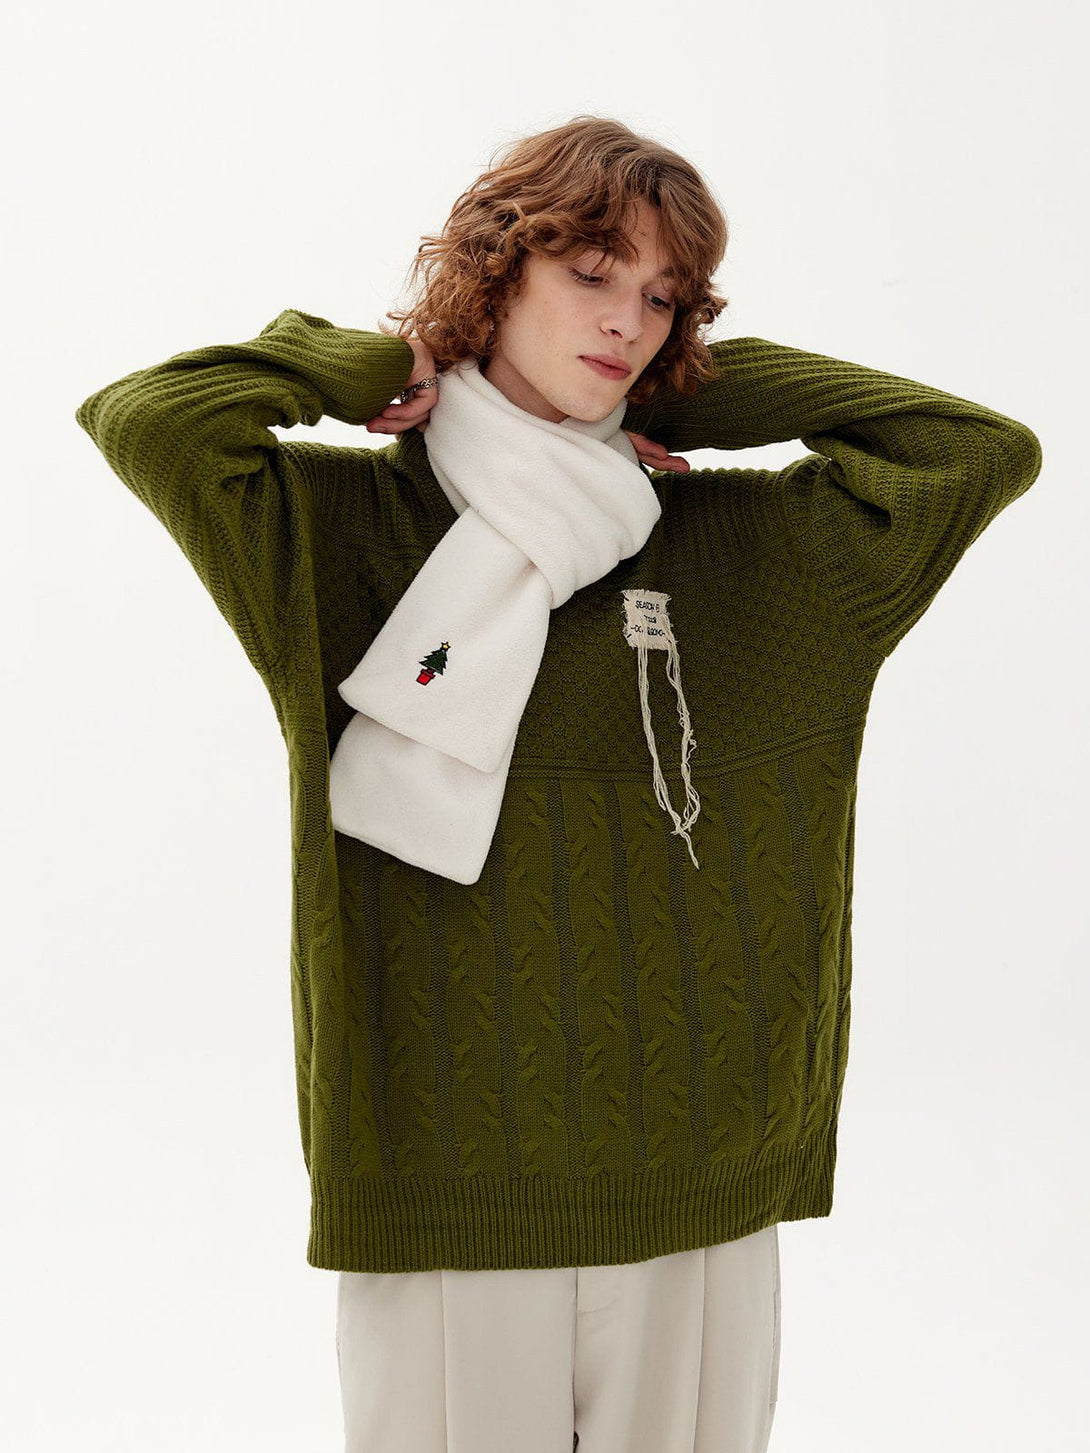 Majesda® - Labeled Tassel Sweater outfit ideas streetwear fashion